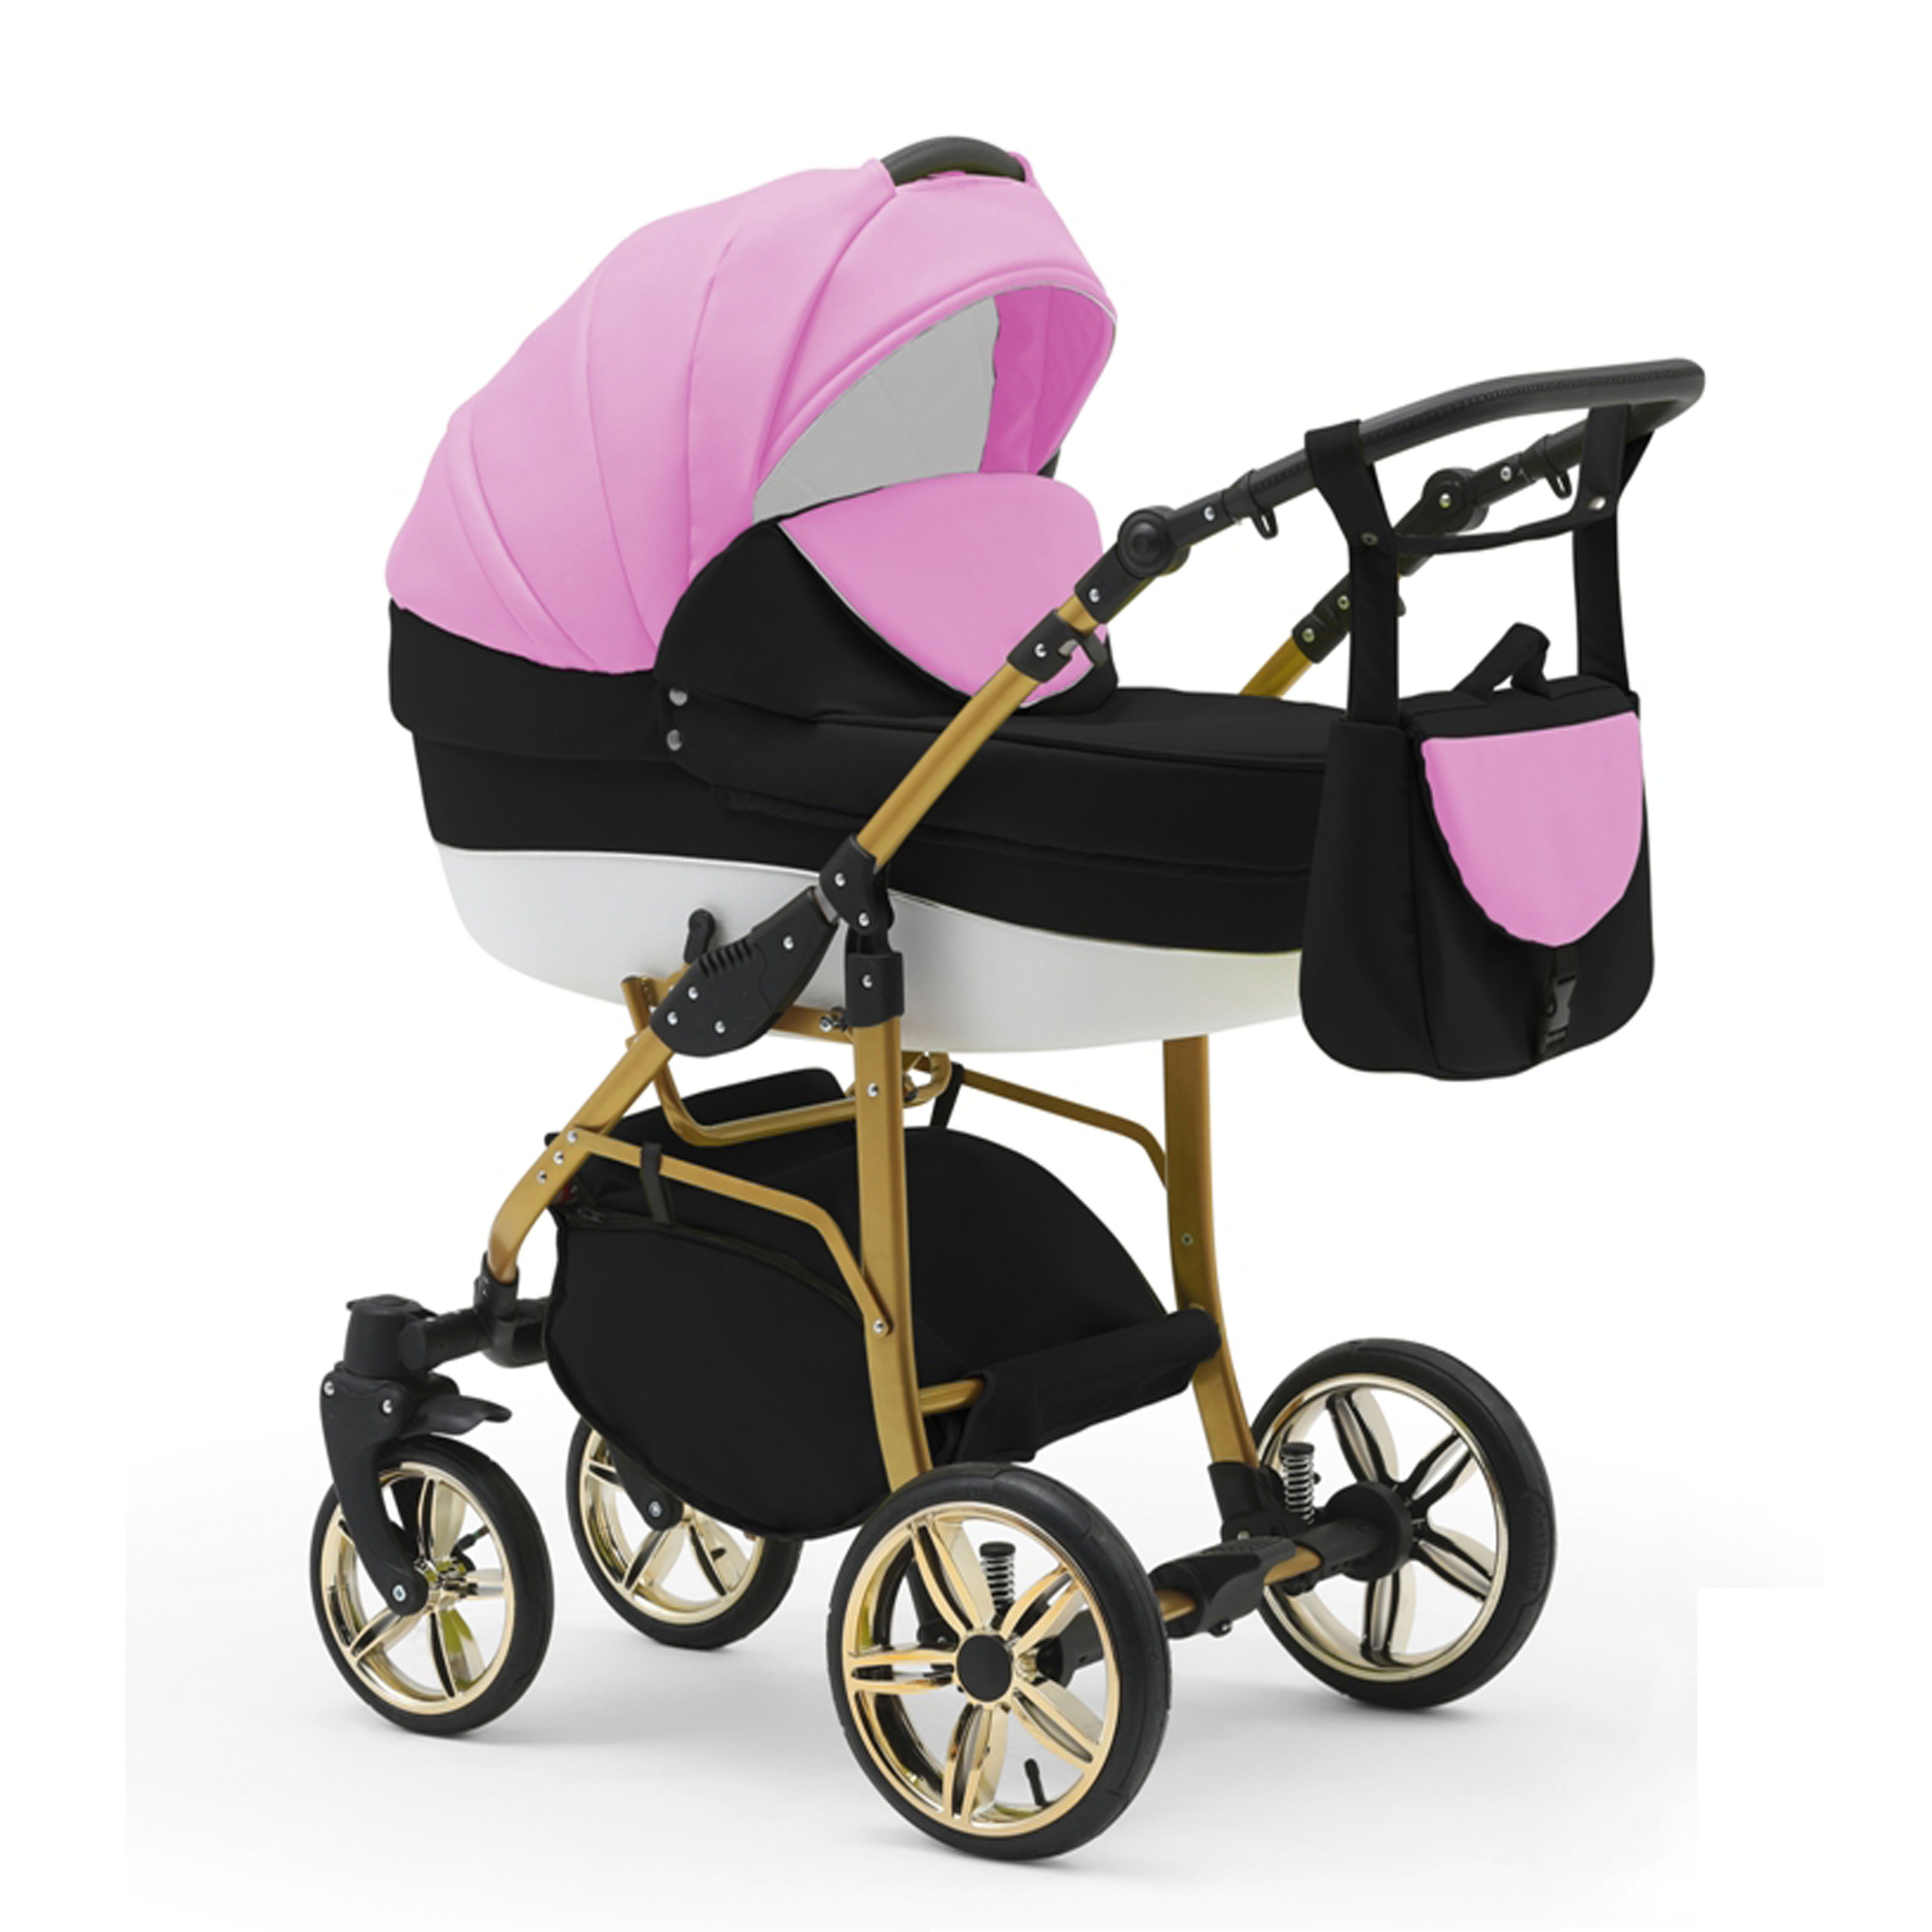 Kinderwagen-Set Teile in Pink-Schwarz-Weiß - Gold babies-on-wheels Farben - in Kombi-Kinderwagen ECO 13 Cosmo 2 1 46